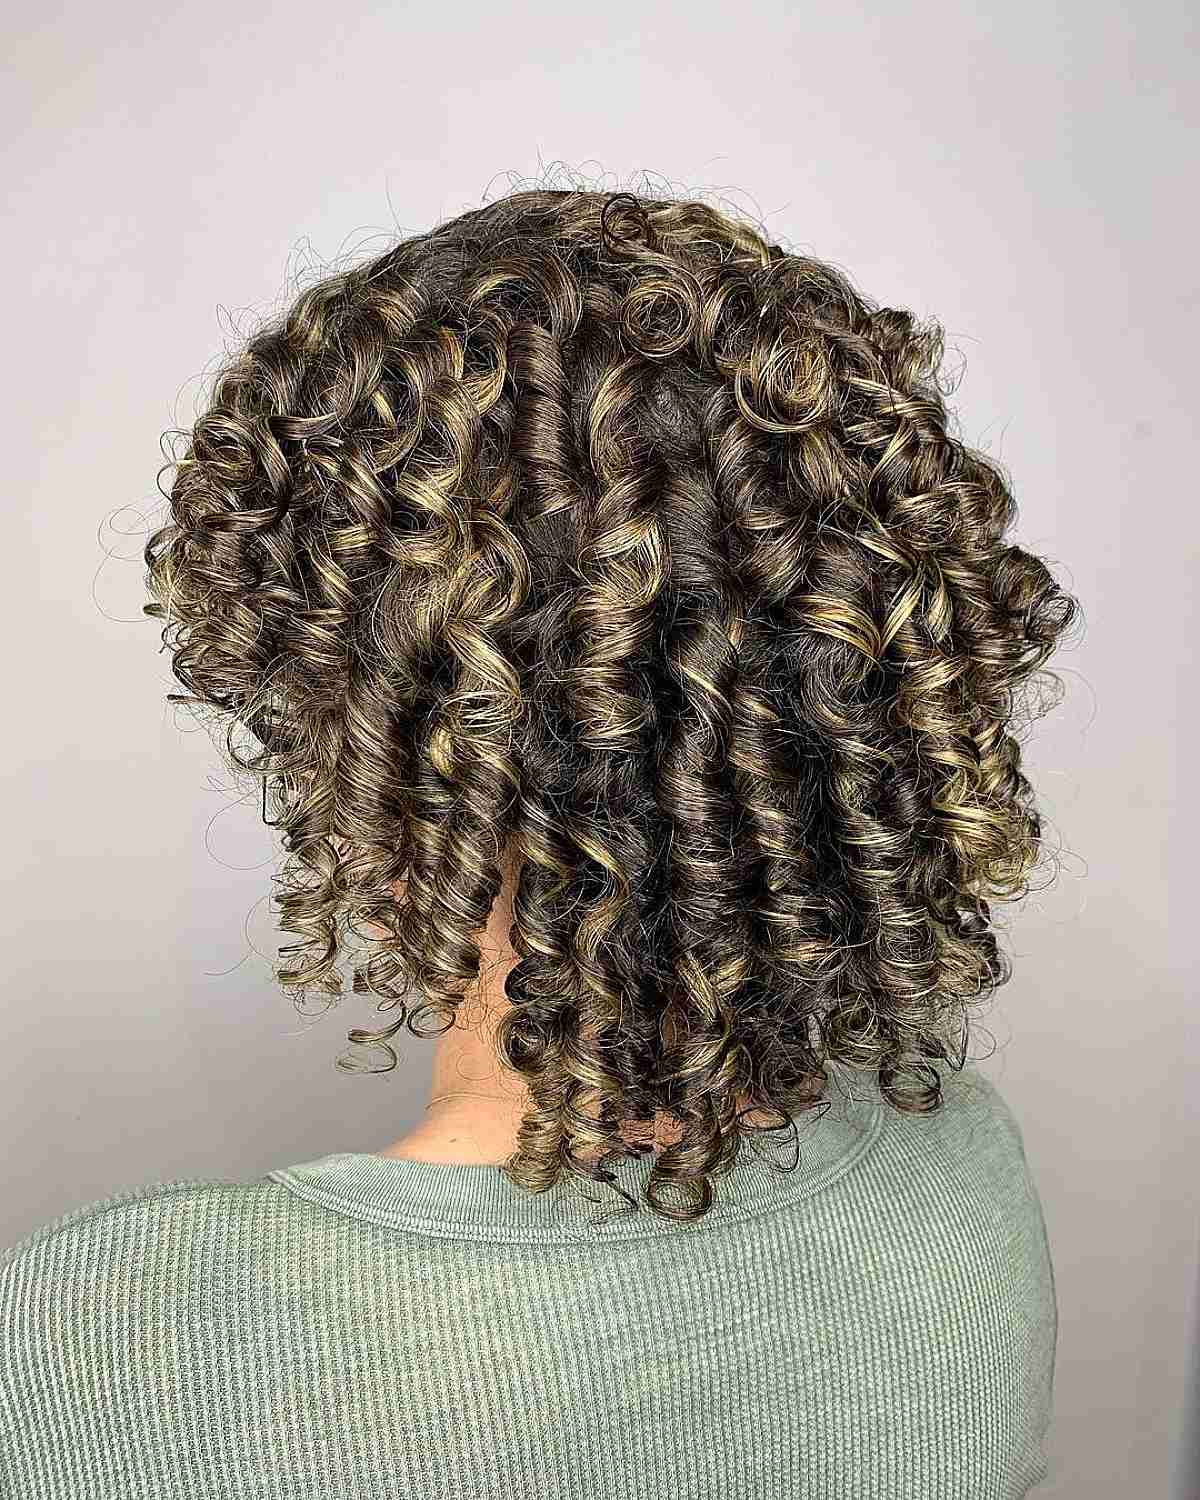 Summer Balayage Highlights on Spiral Curly Hair